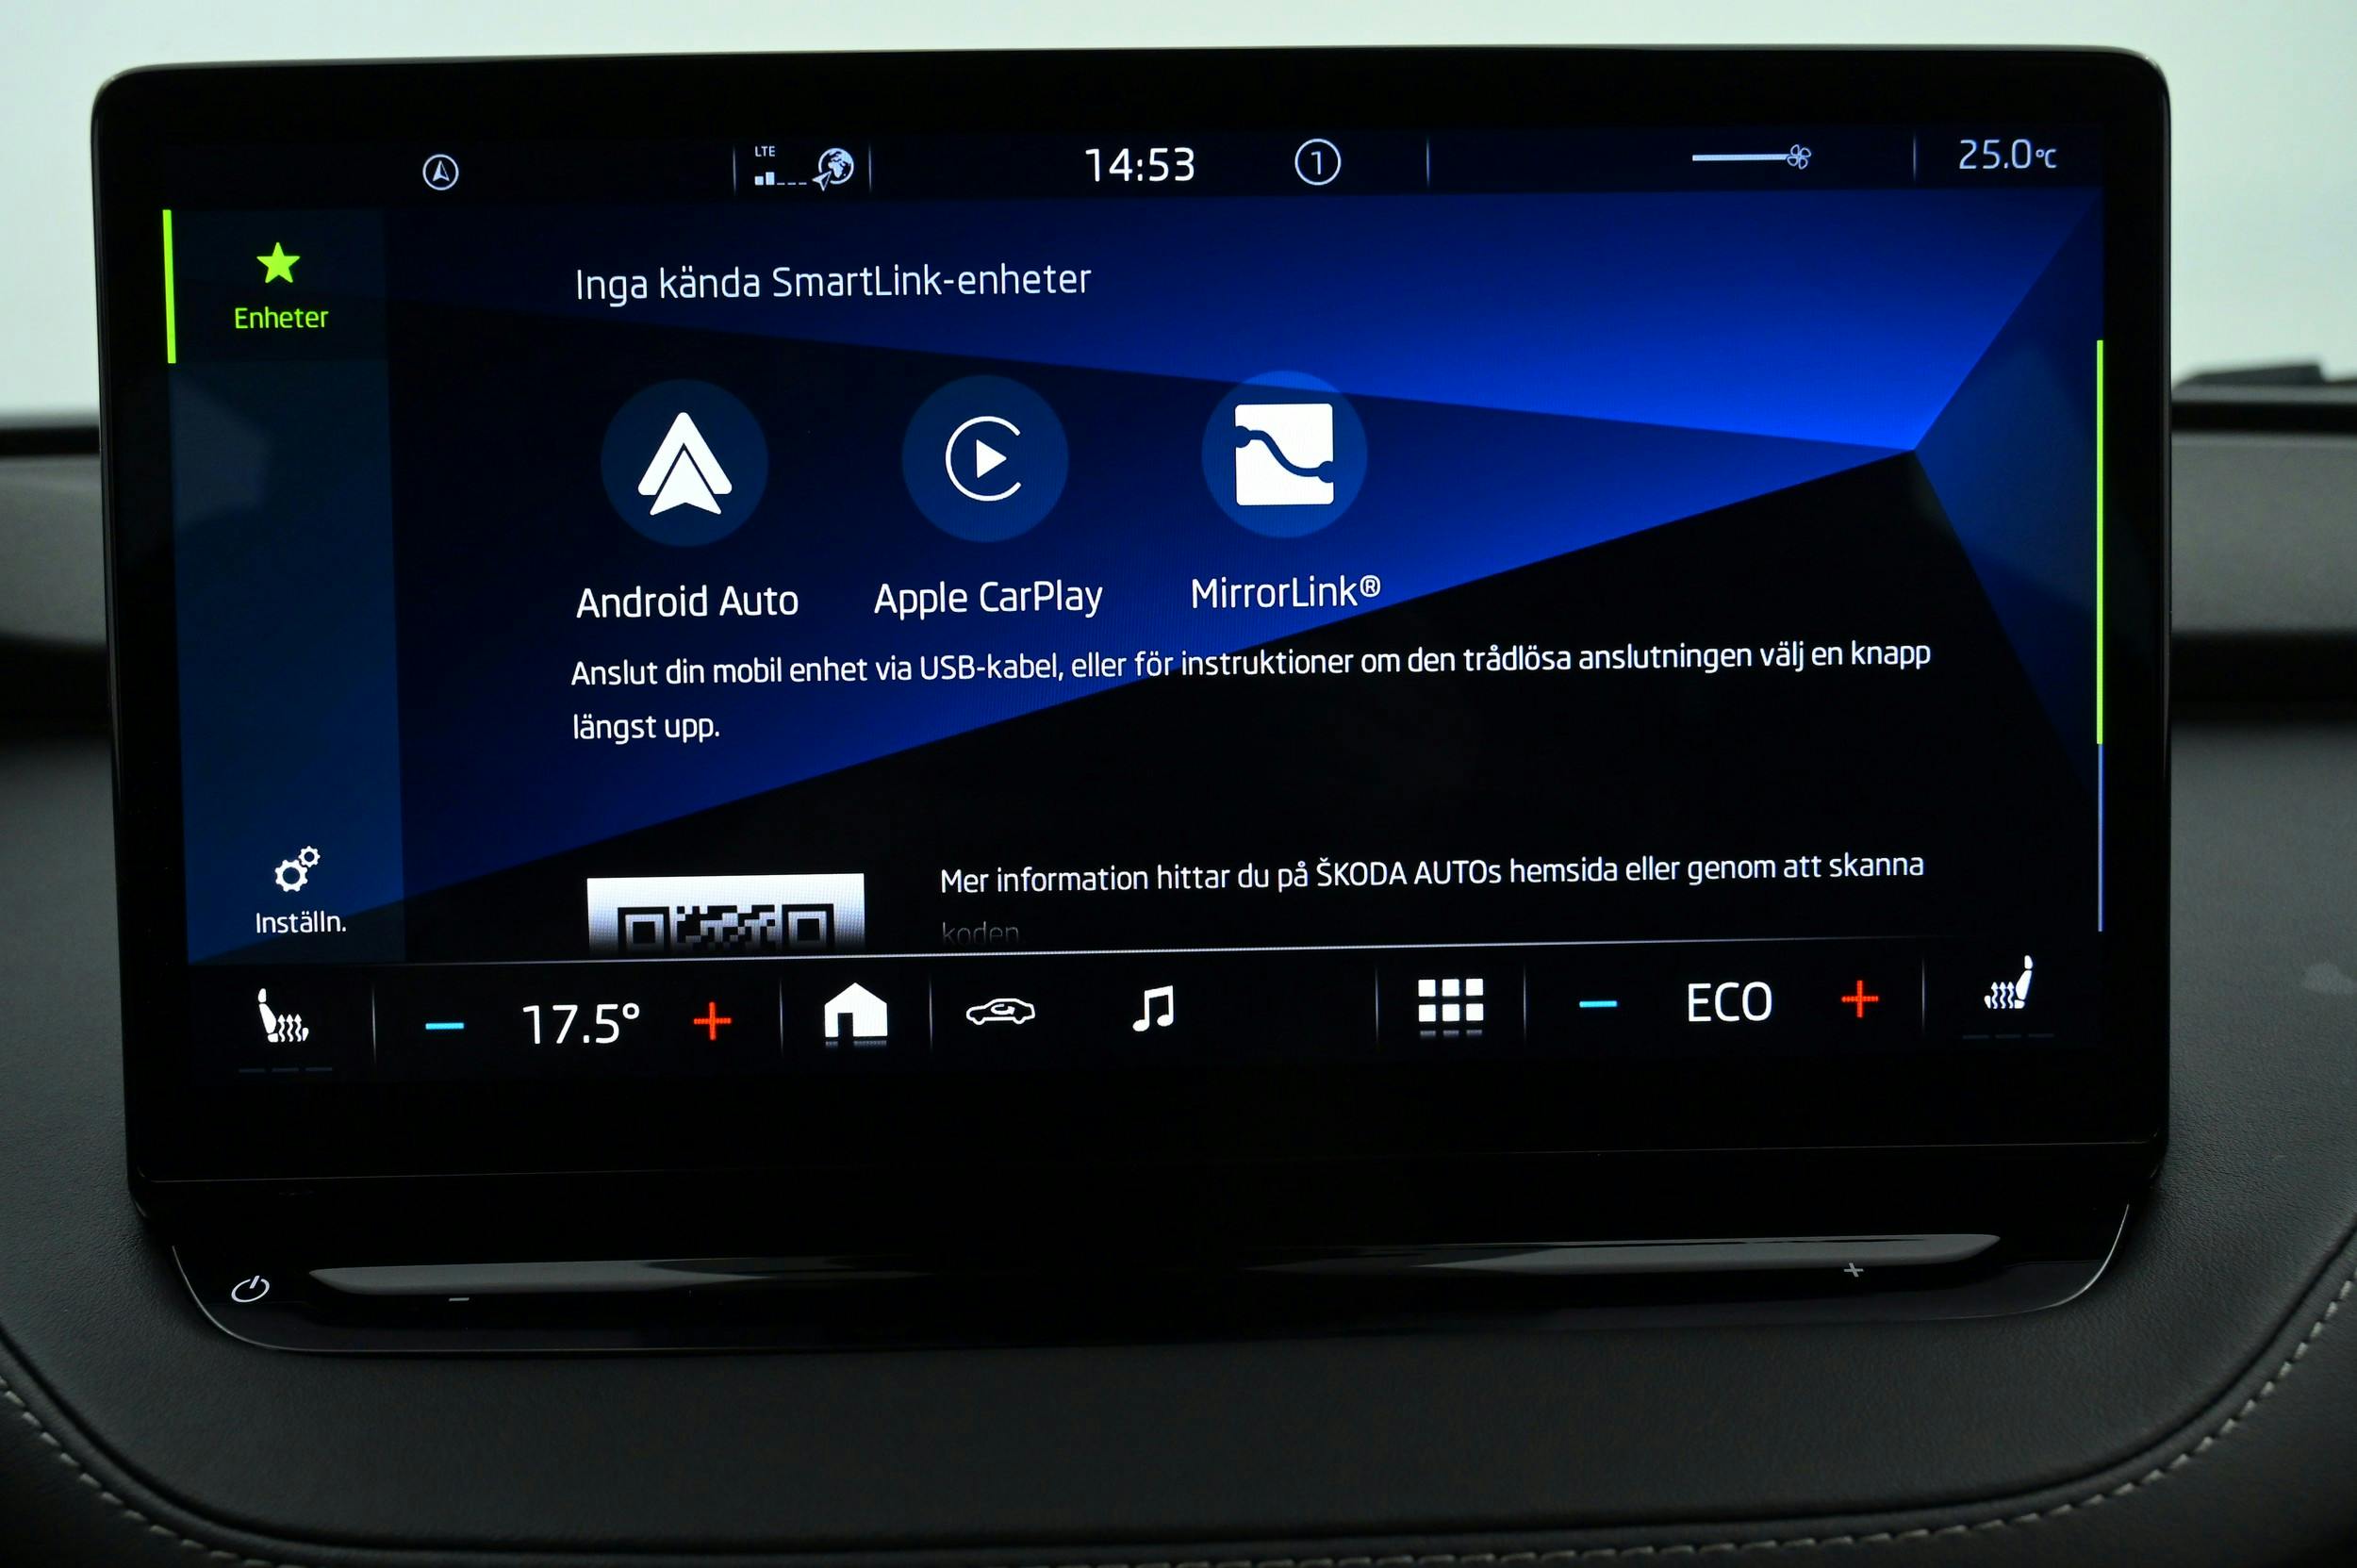 Infotainment - Android Auto, Apple CarPlay, MirrorLink